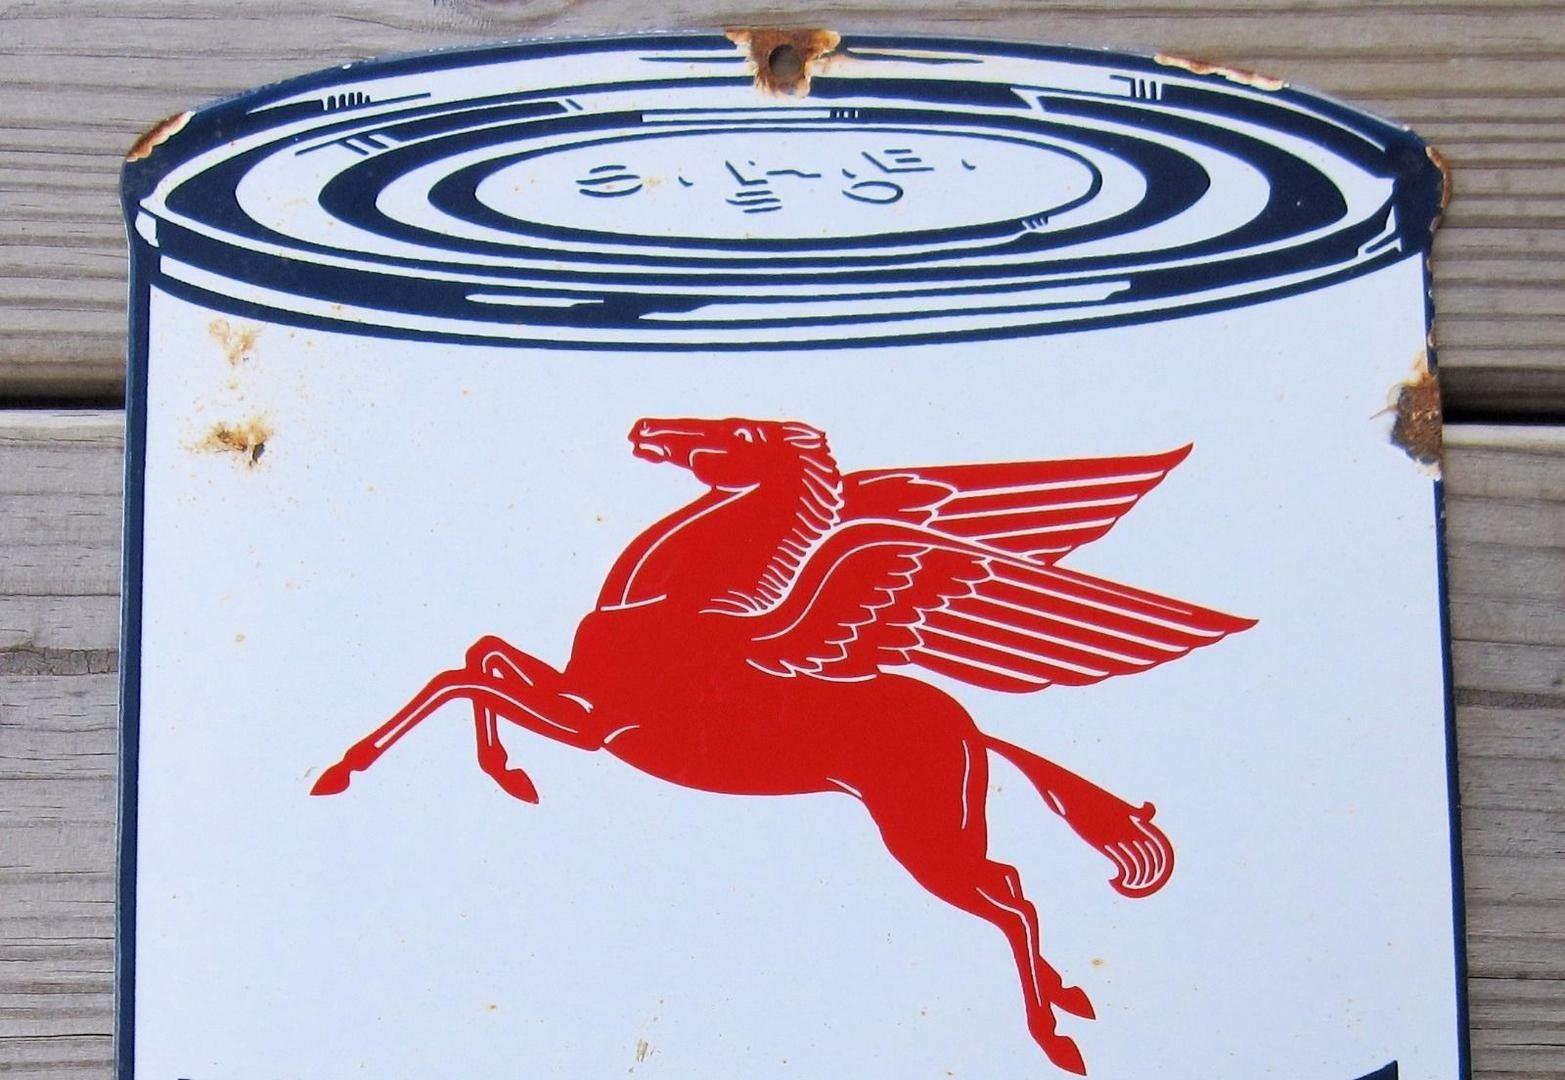 Blue and Red Pegasus Logo - MOBILOIL RED PEGASUS LOGO PORCELAIN ENAMEL OIL CAN GAS LUBESTER ...